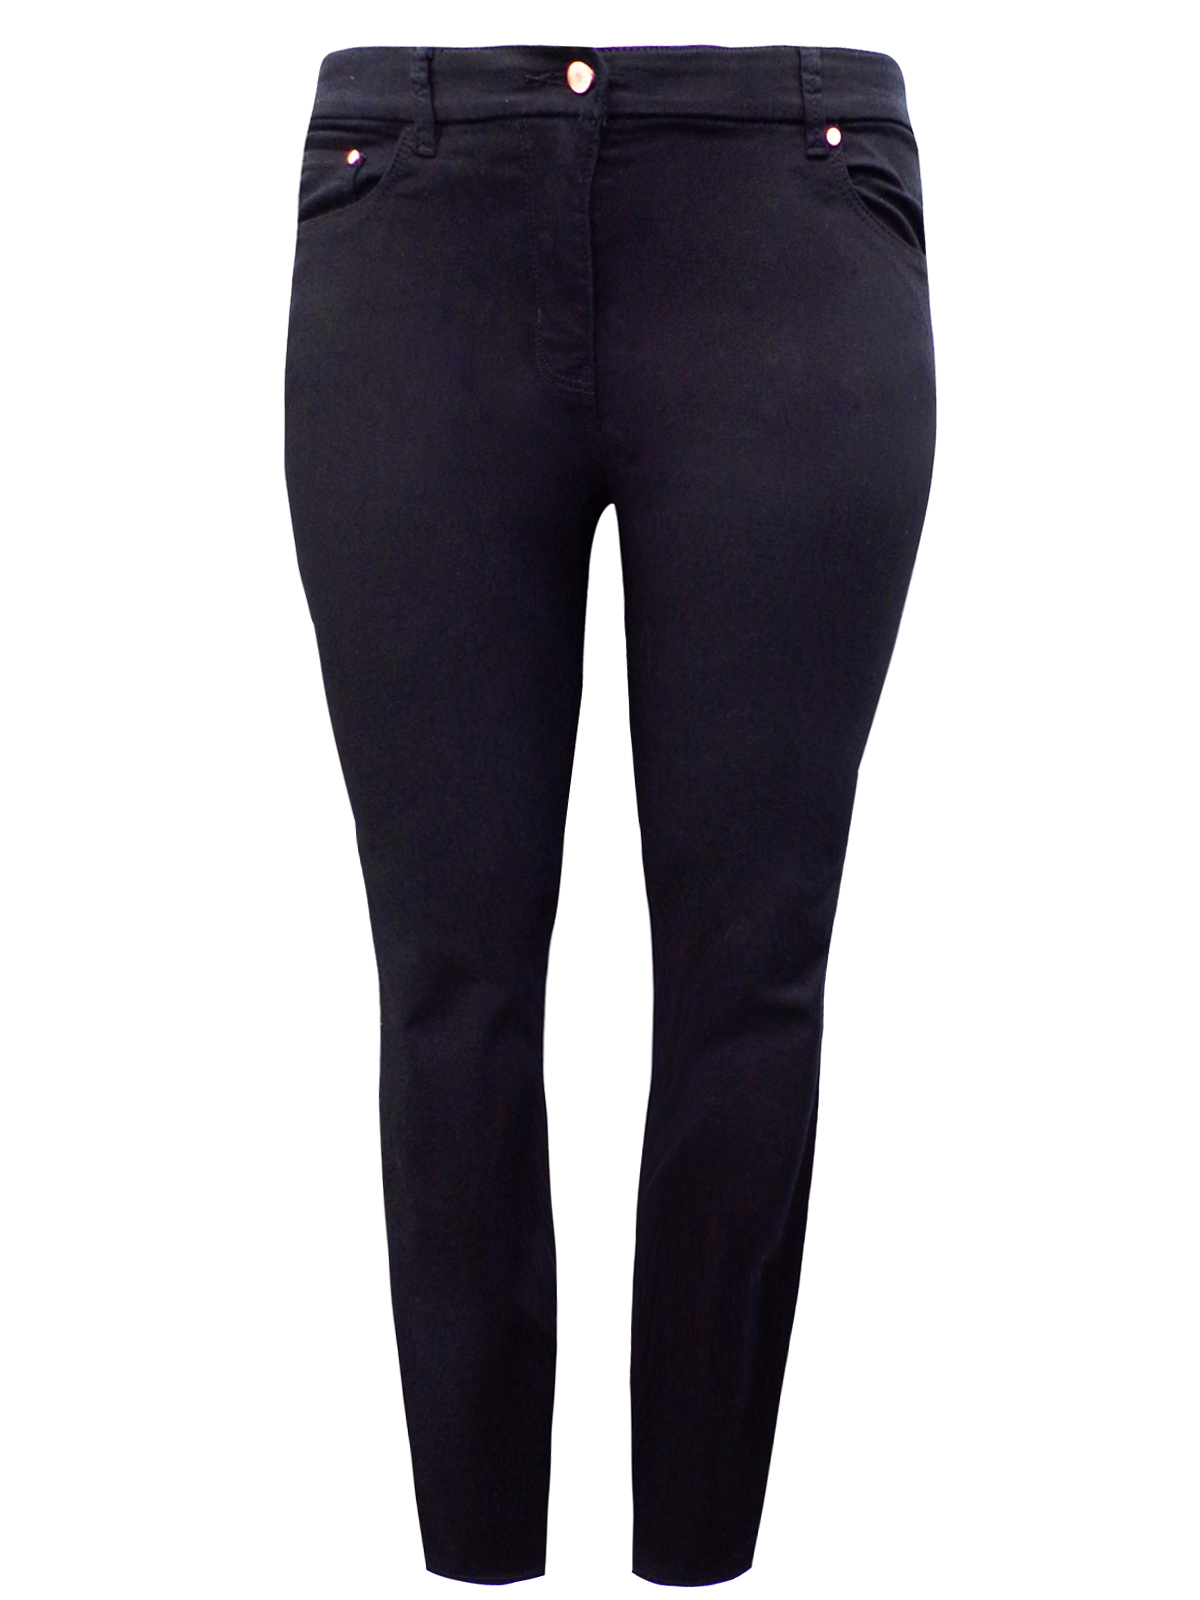 H&M BLACK 5-Pocket Denim Skinny Jeans - Plus Size 16 to 26